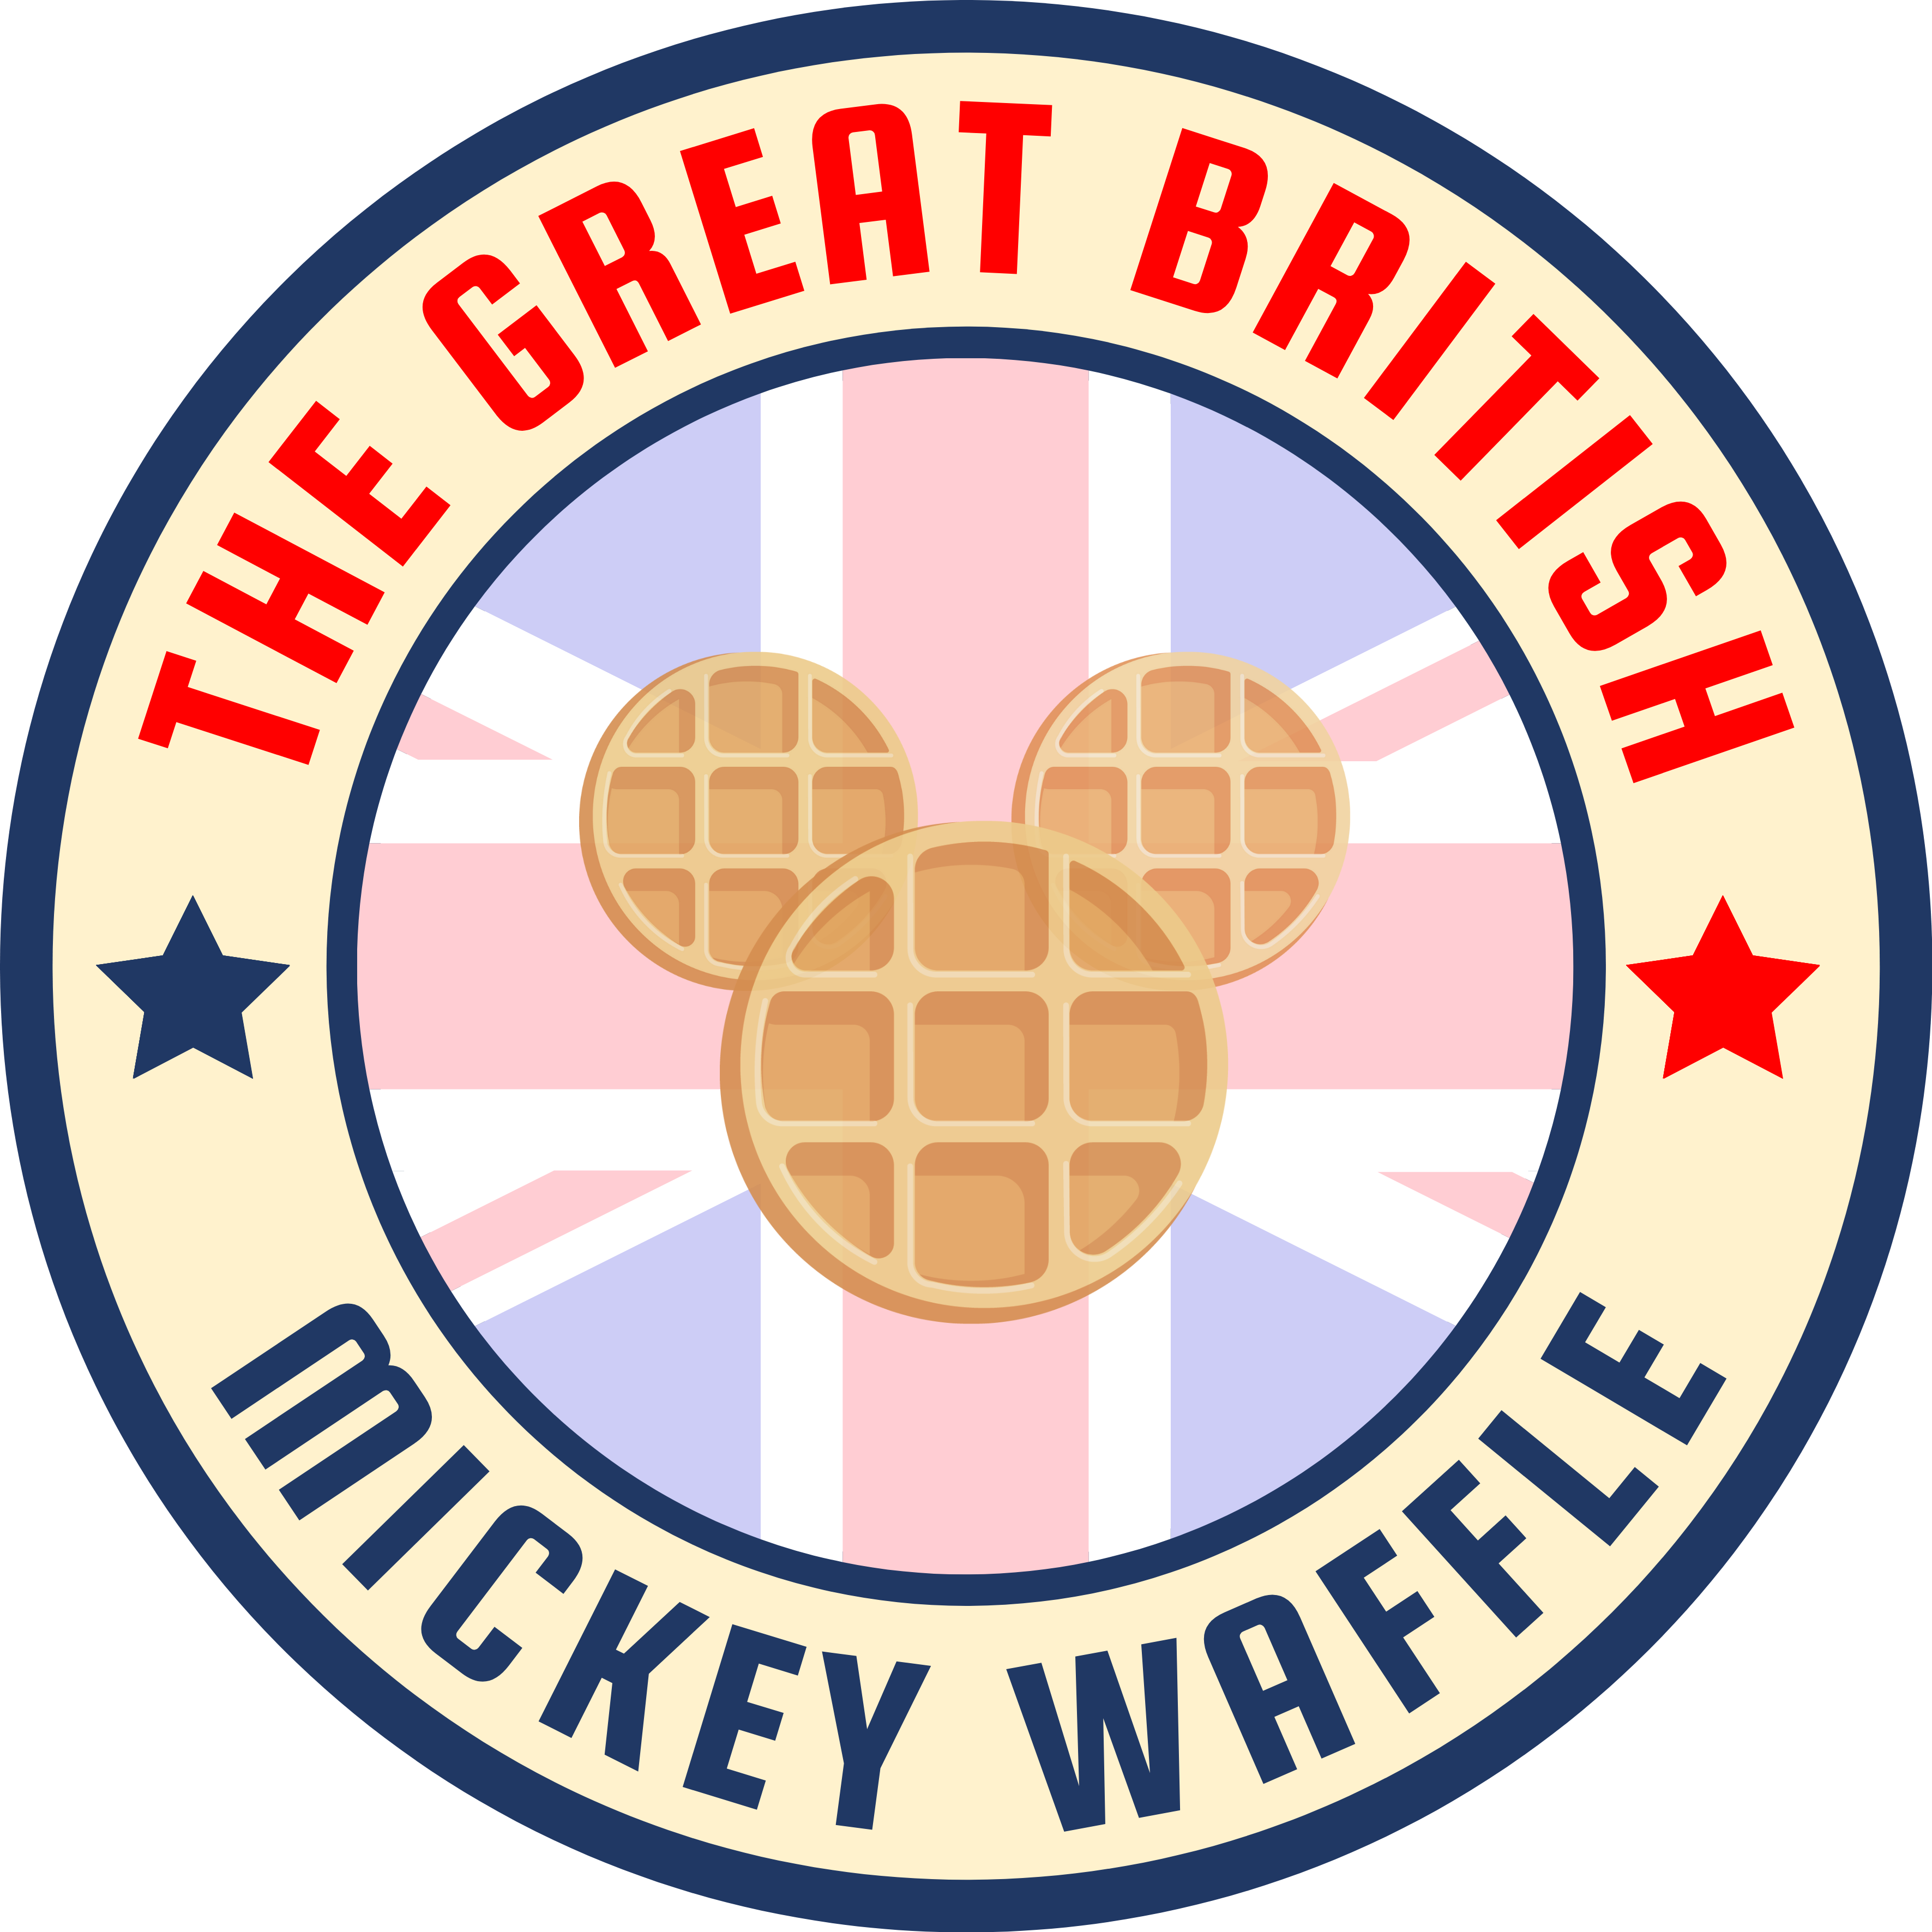 The Great British Mickey Waffle